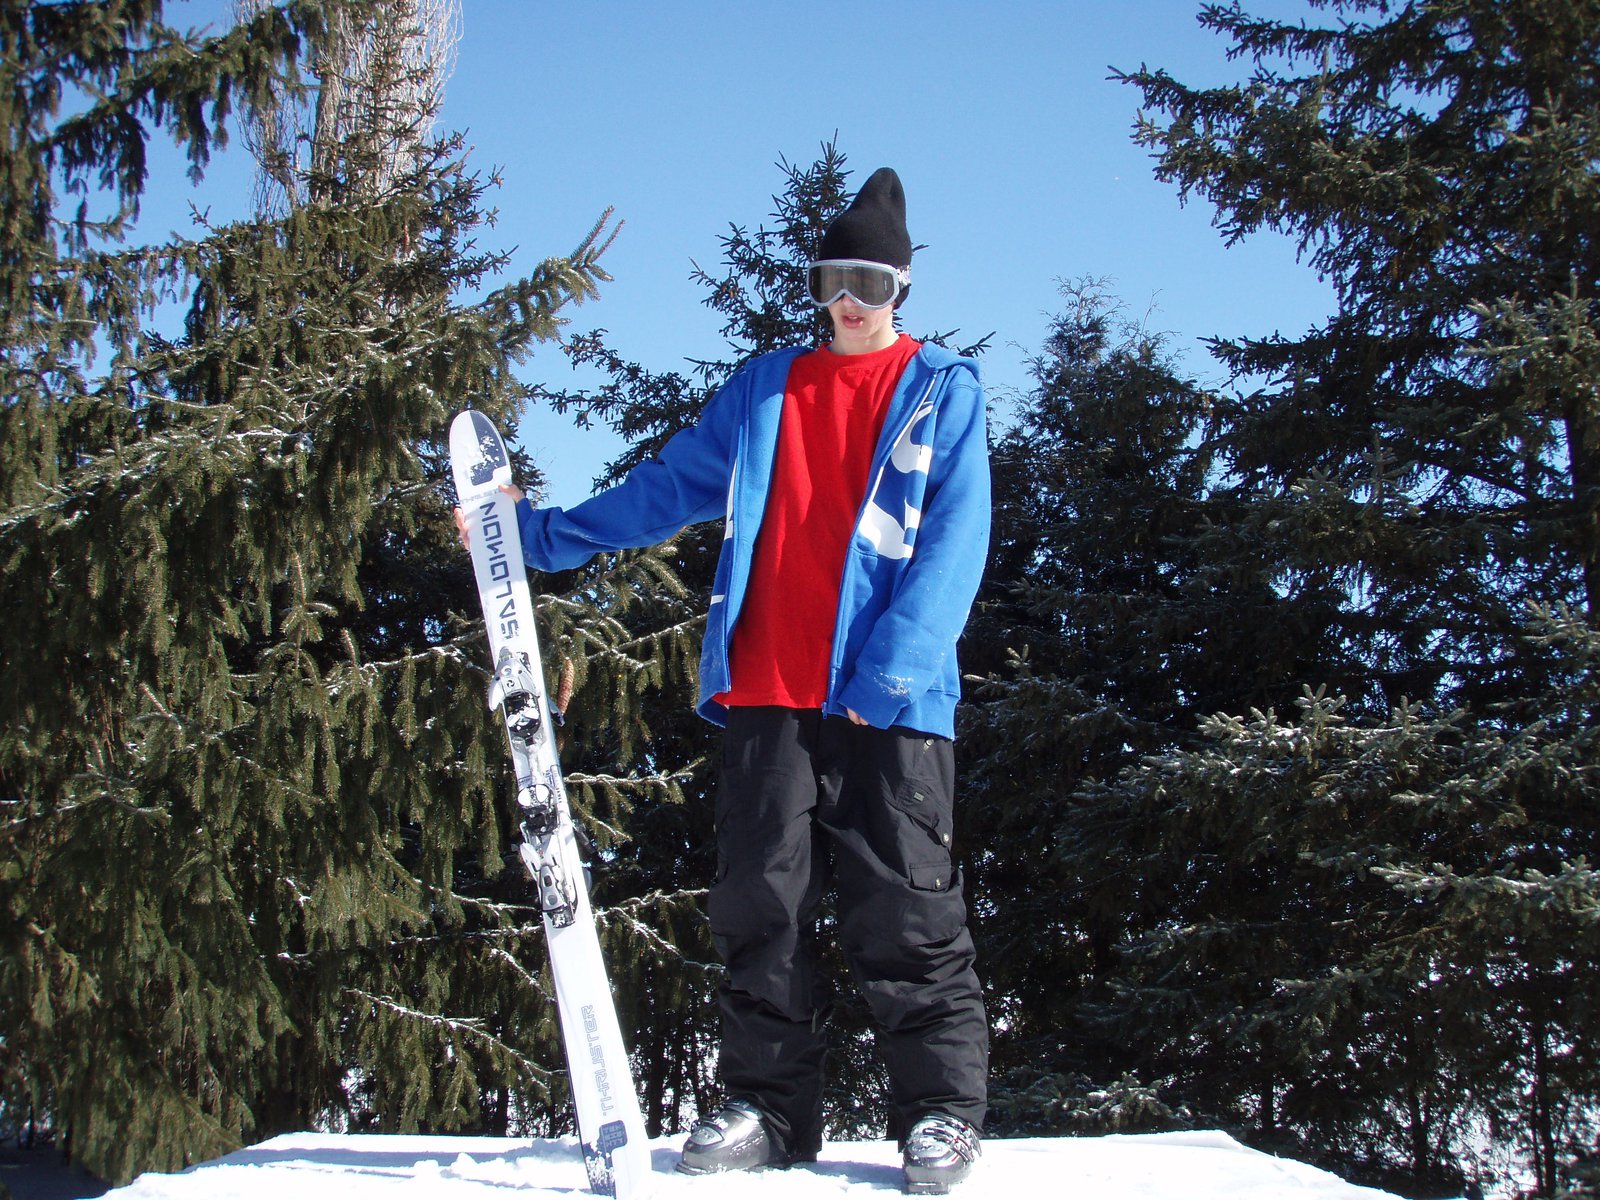 Me with my Ski